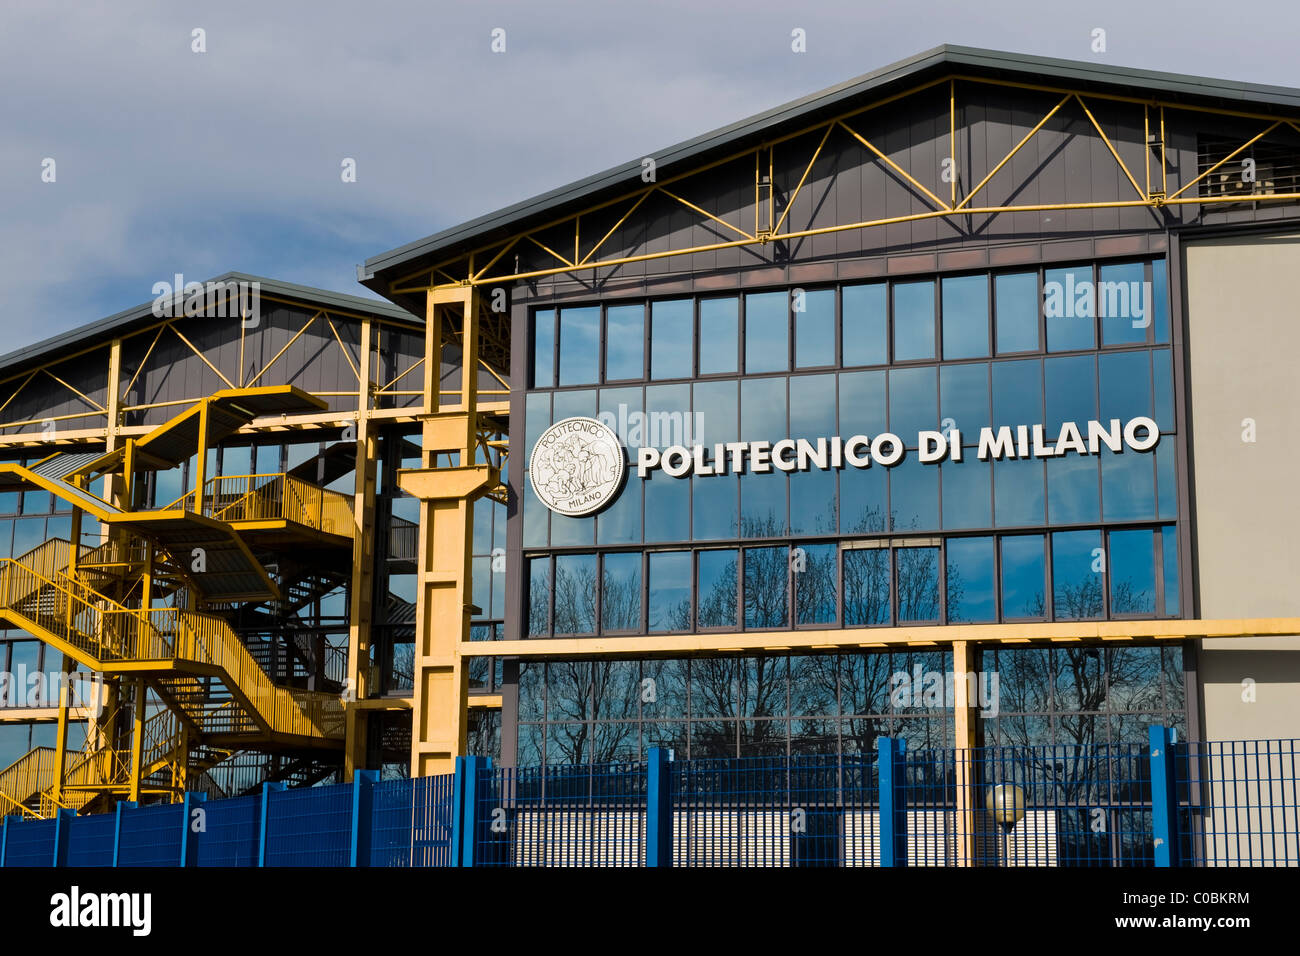 Politecnico Campus Bovisa, Milan, italy Stock Photo - Alamy